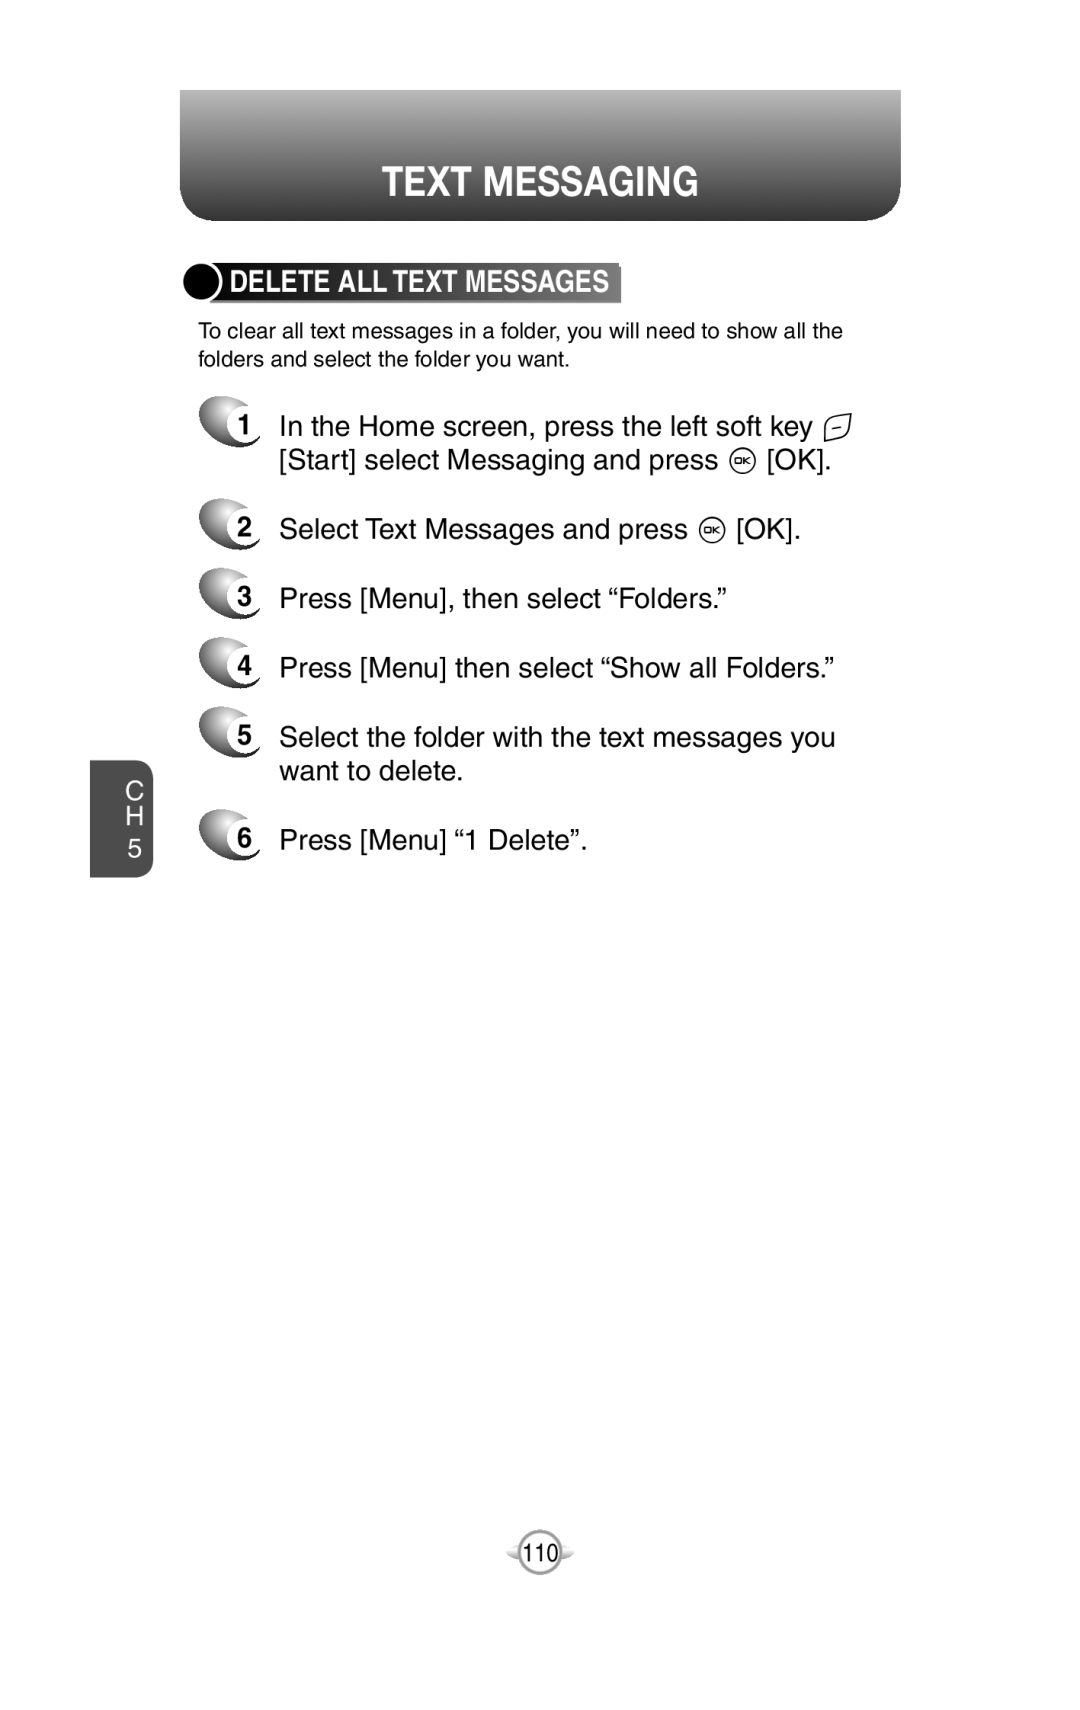 UTStarcom PN-820 user manual Delete All Text Messages, want to delete, Press Menu “1 Delete”, Text Messaging 